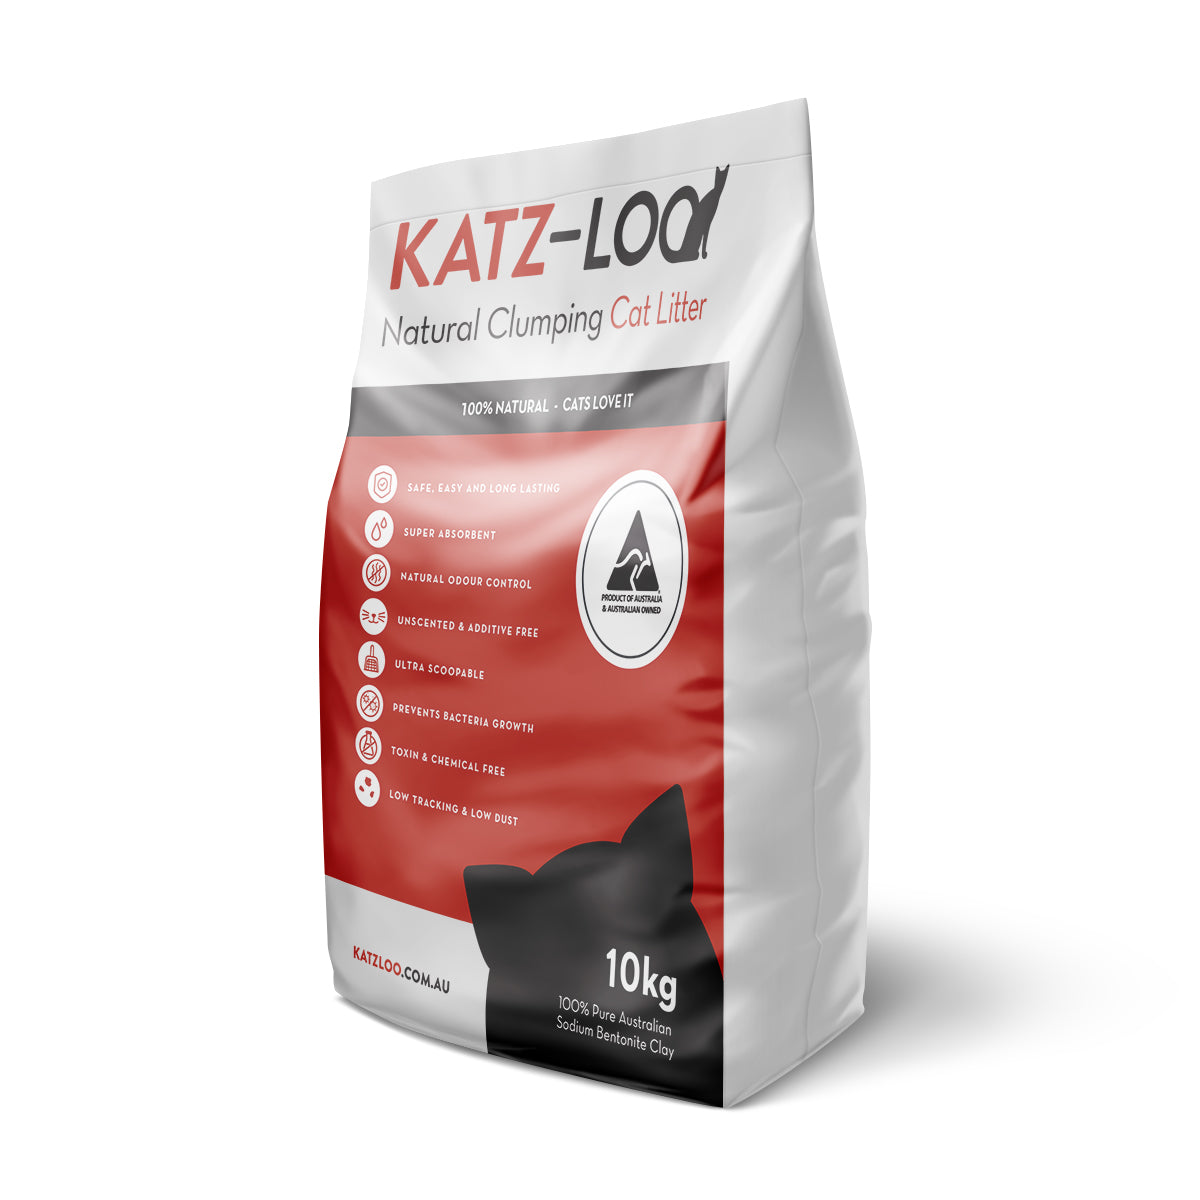 Katz-Loo 10kg litter bag